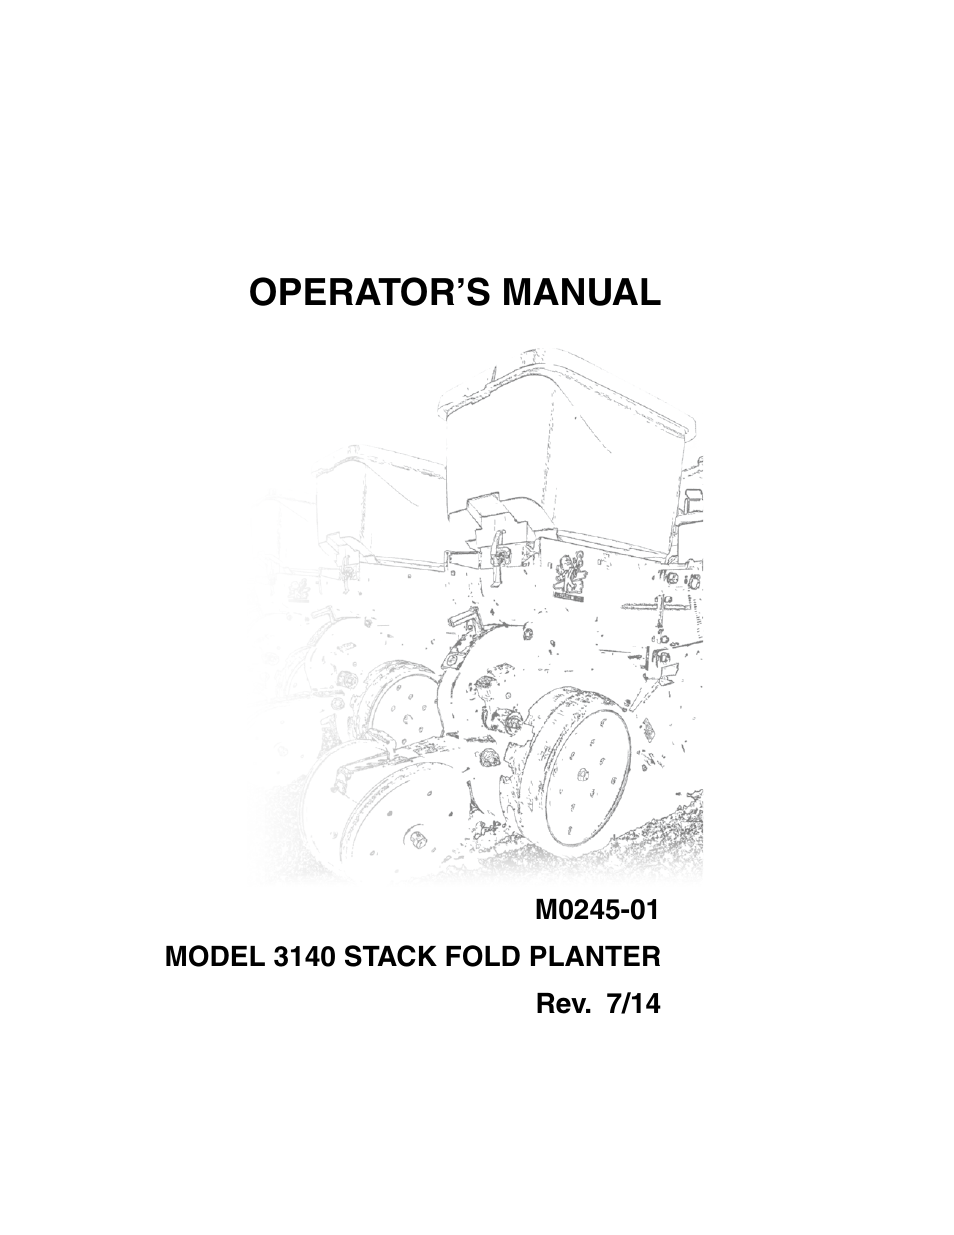 Kinze 3140 Stack Fold Planter Rev. 7/14 User Manual | 150 pages